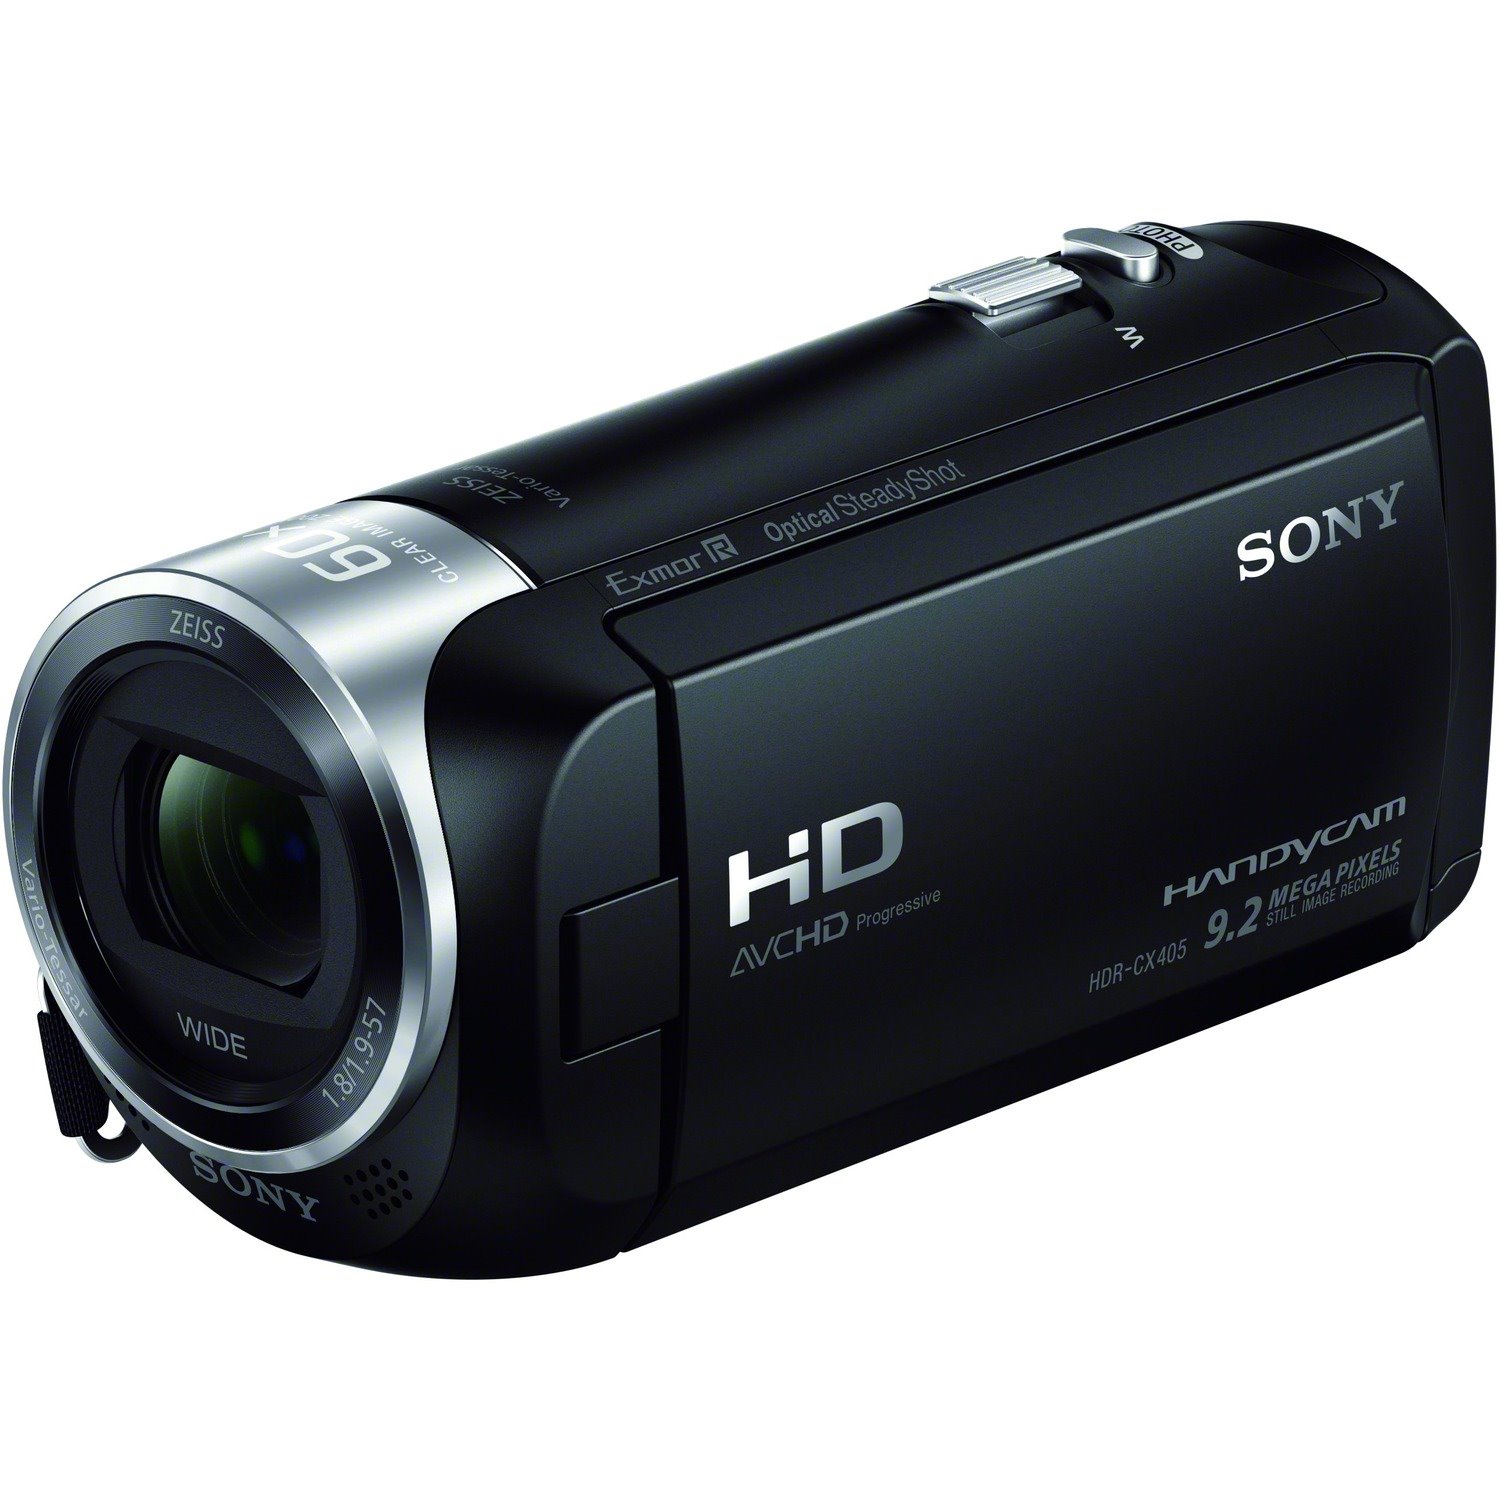 Sony Handycam HDR-CX405 Digital Camcorder - 6.9 cm (2.7") LCD Screen - Exmor R CMOS - Full HD - Black